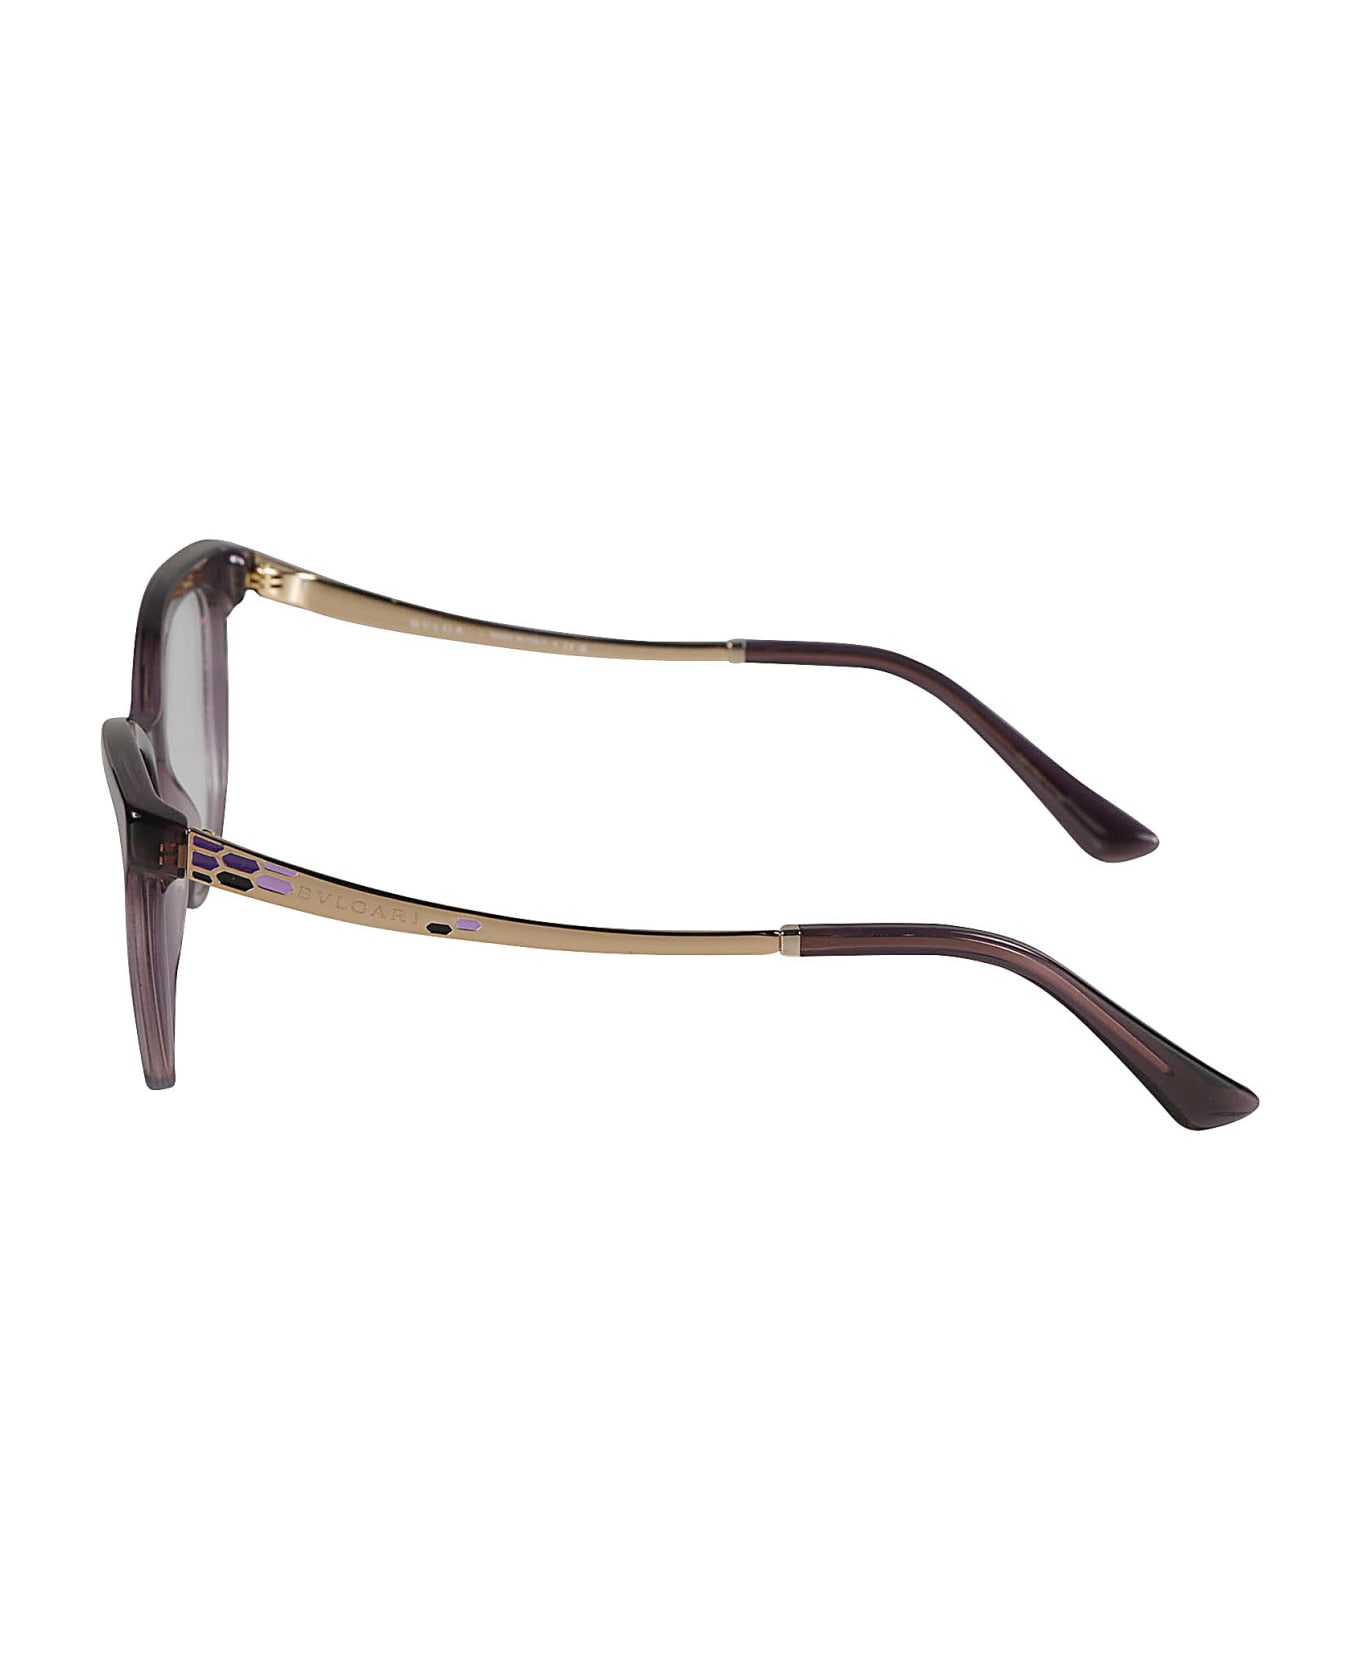 Bulgari Logo Sided Glasses - 5514 アイウェア